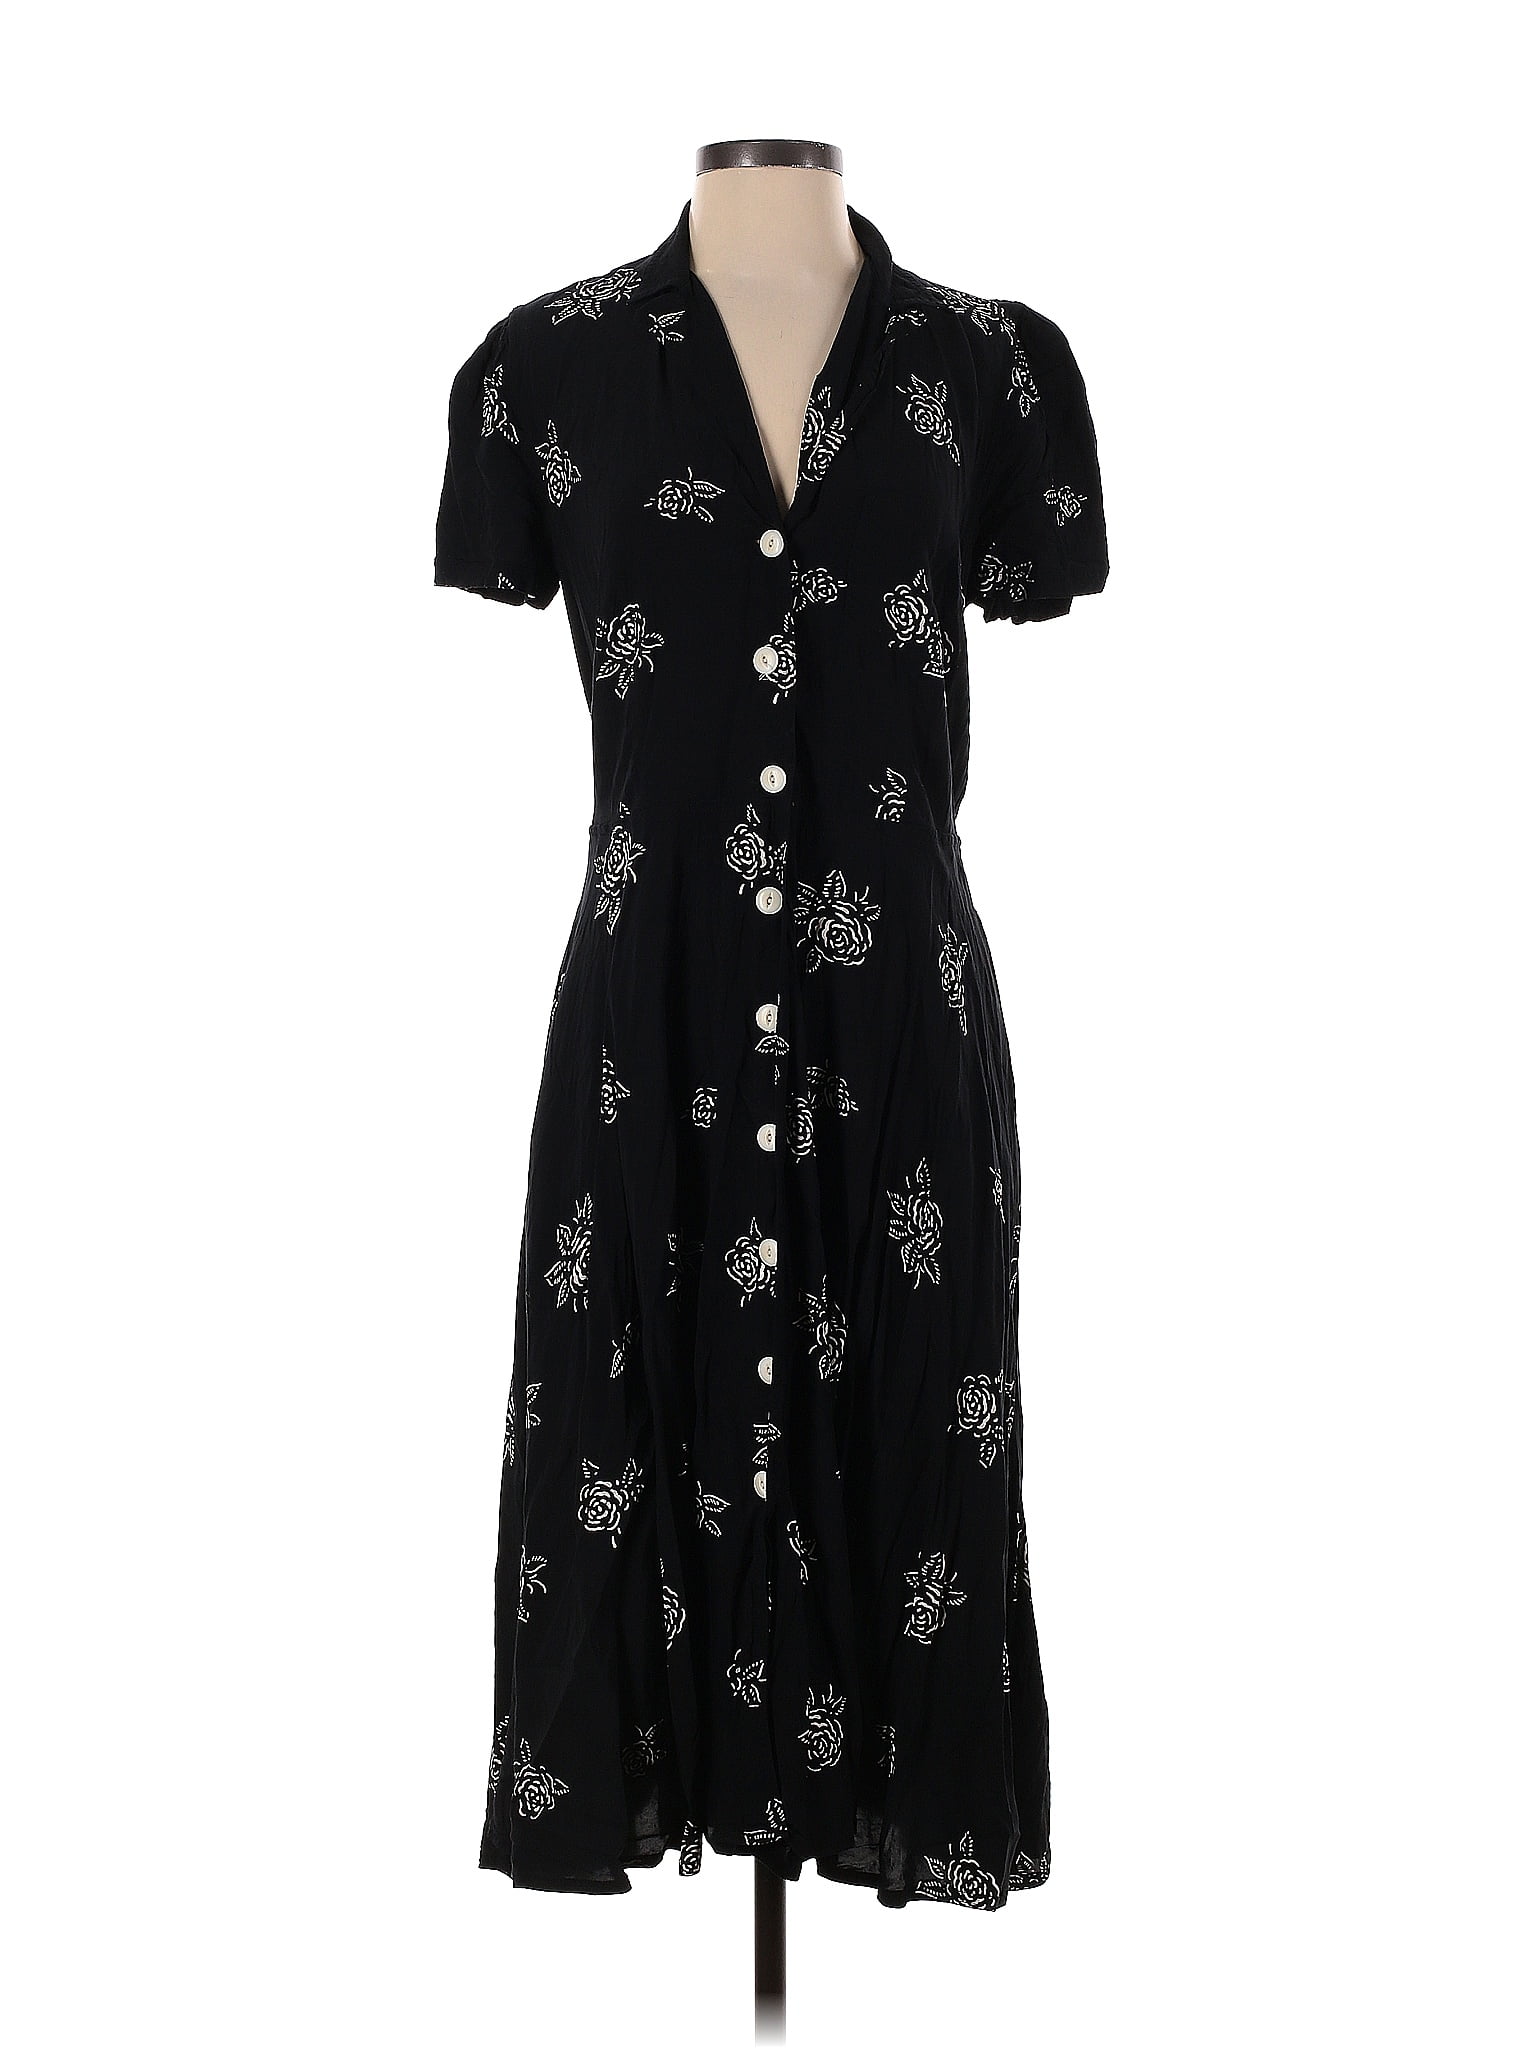 Polo by Ralph Lauren 100% Viscose Black Printed Hampton Shirt Dress Size 8  - 66% off